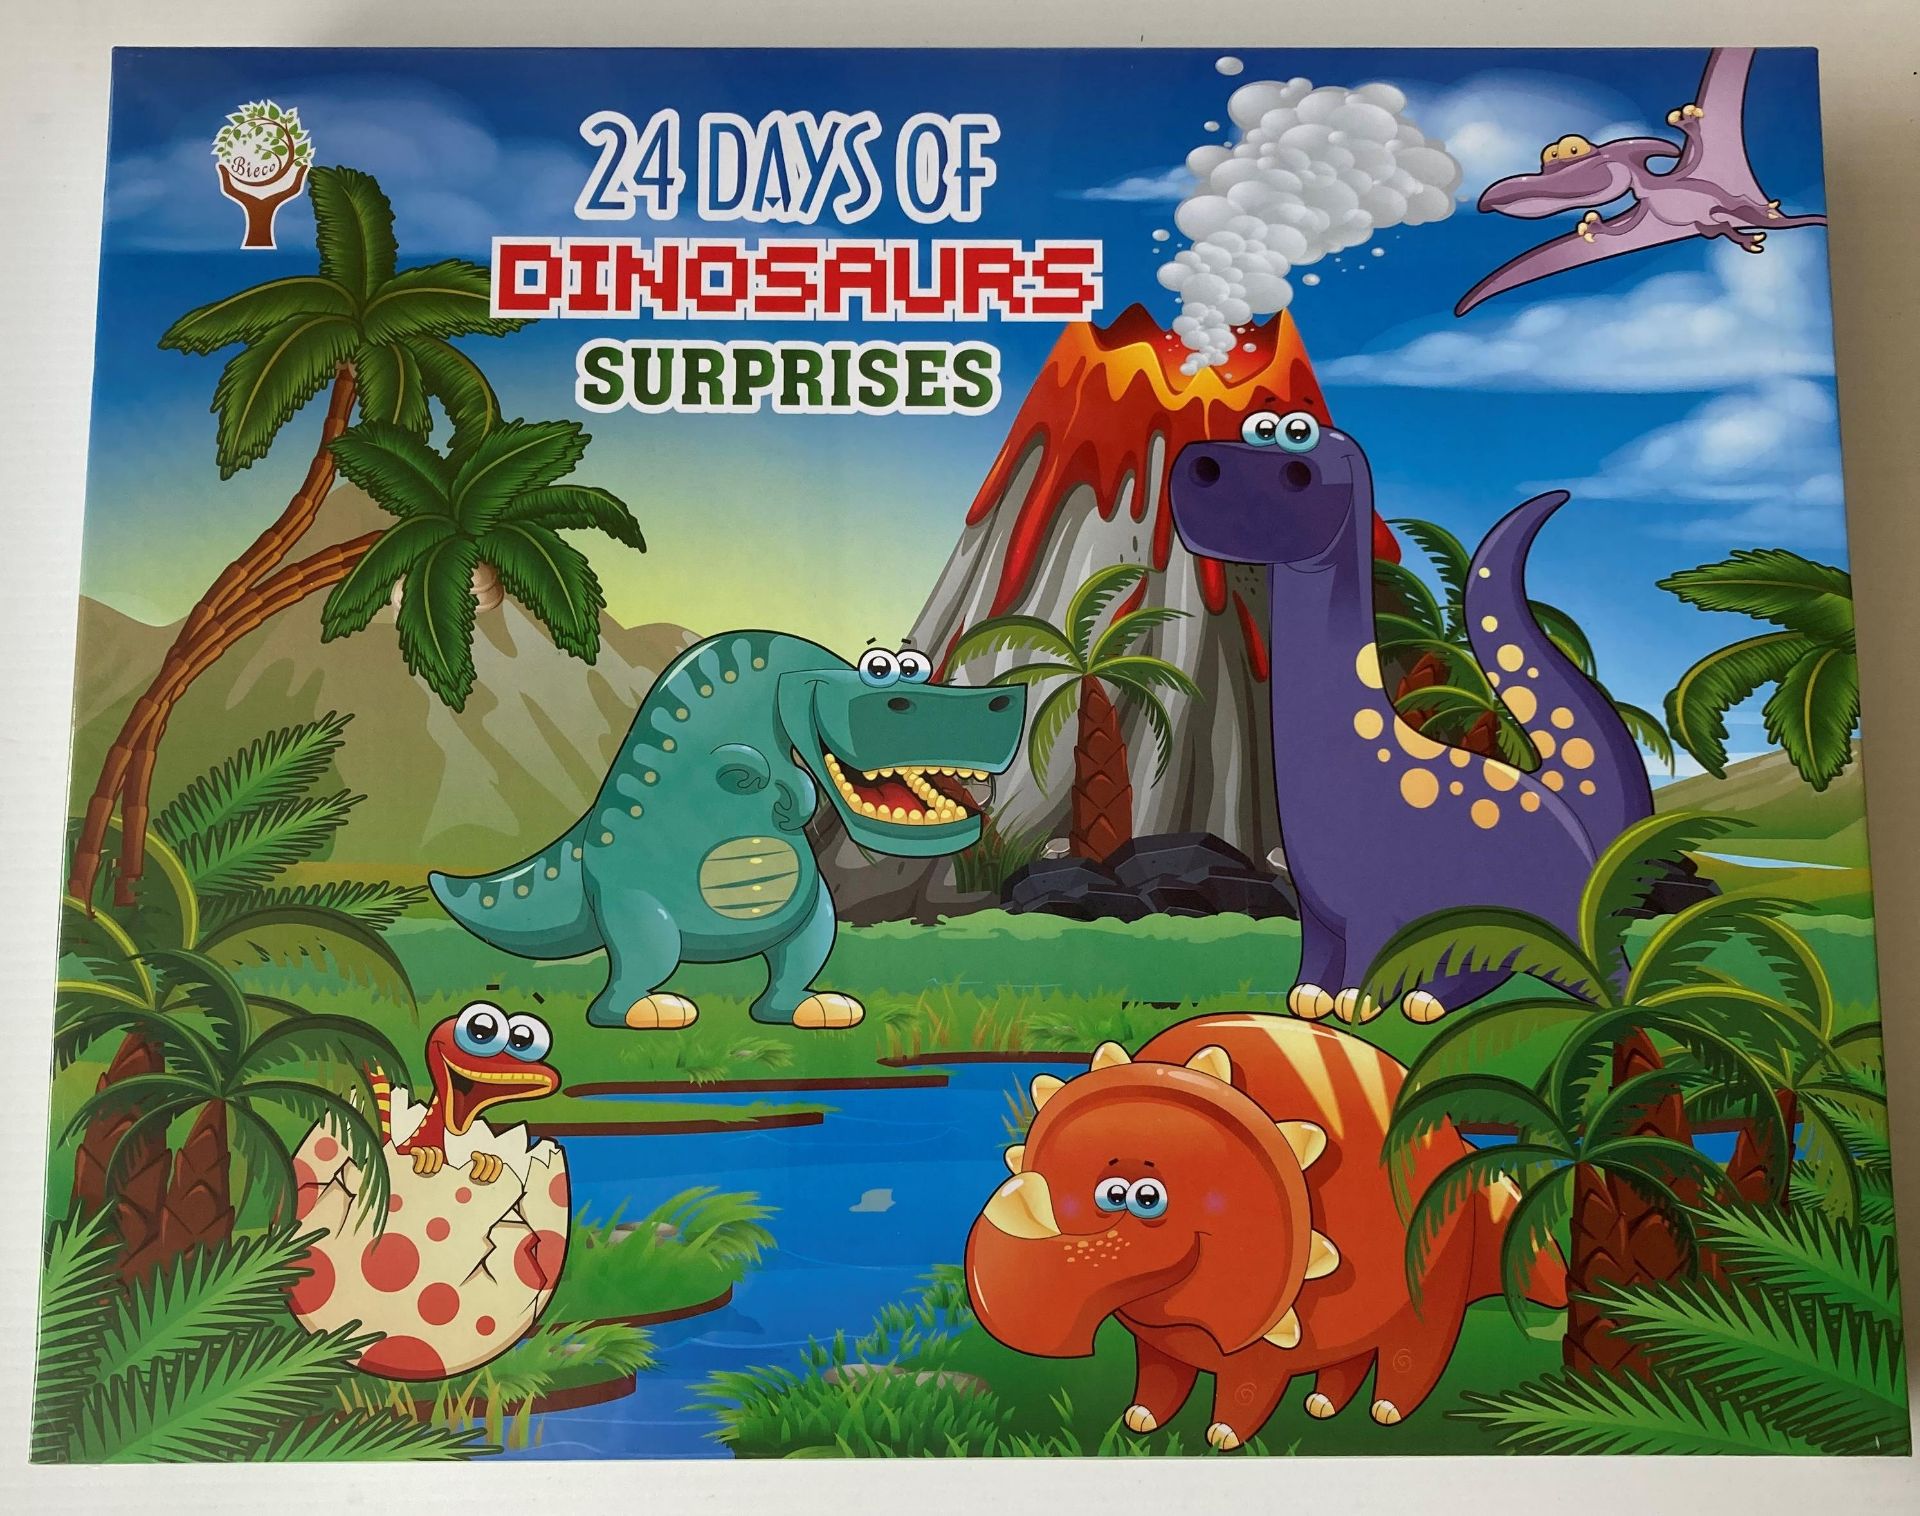 100 x 24 Days of Dinosaur Surprises Avent Calendars (5 x outer box) (saleroom location: container